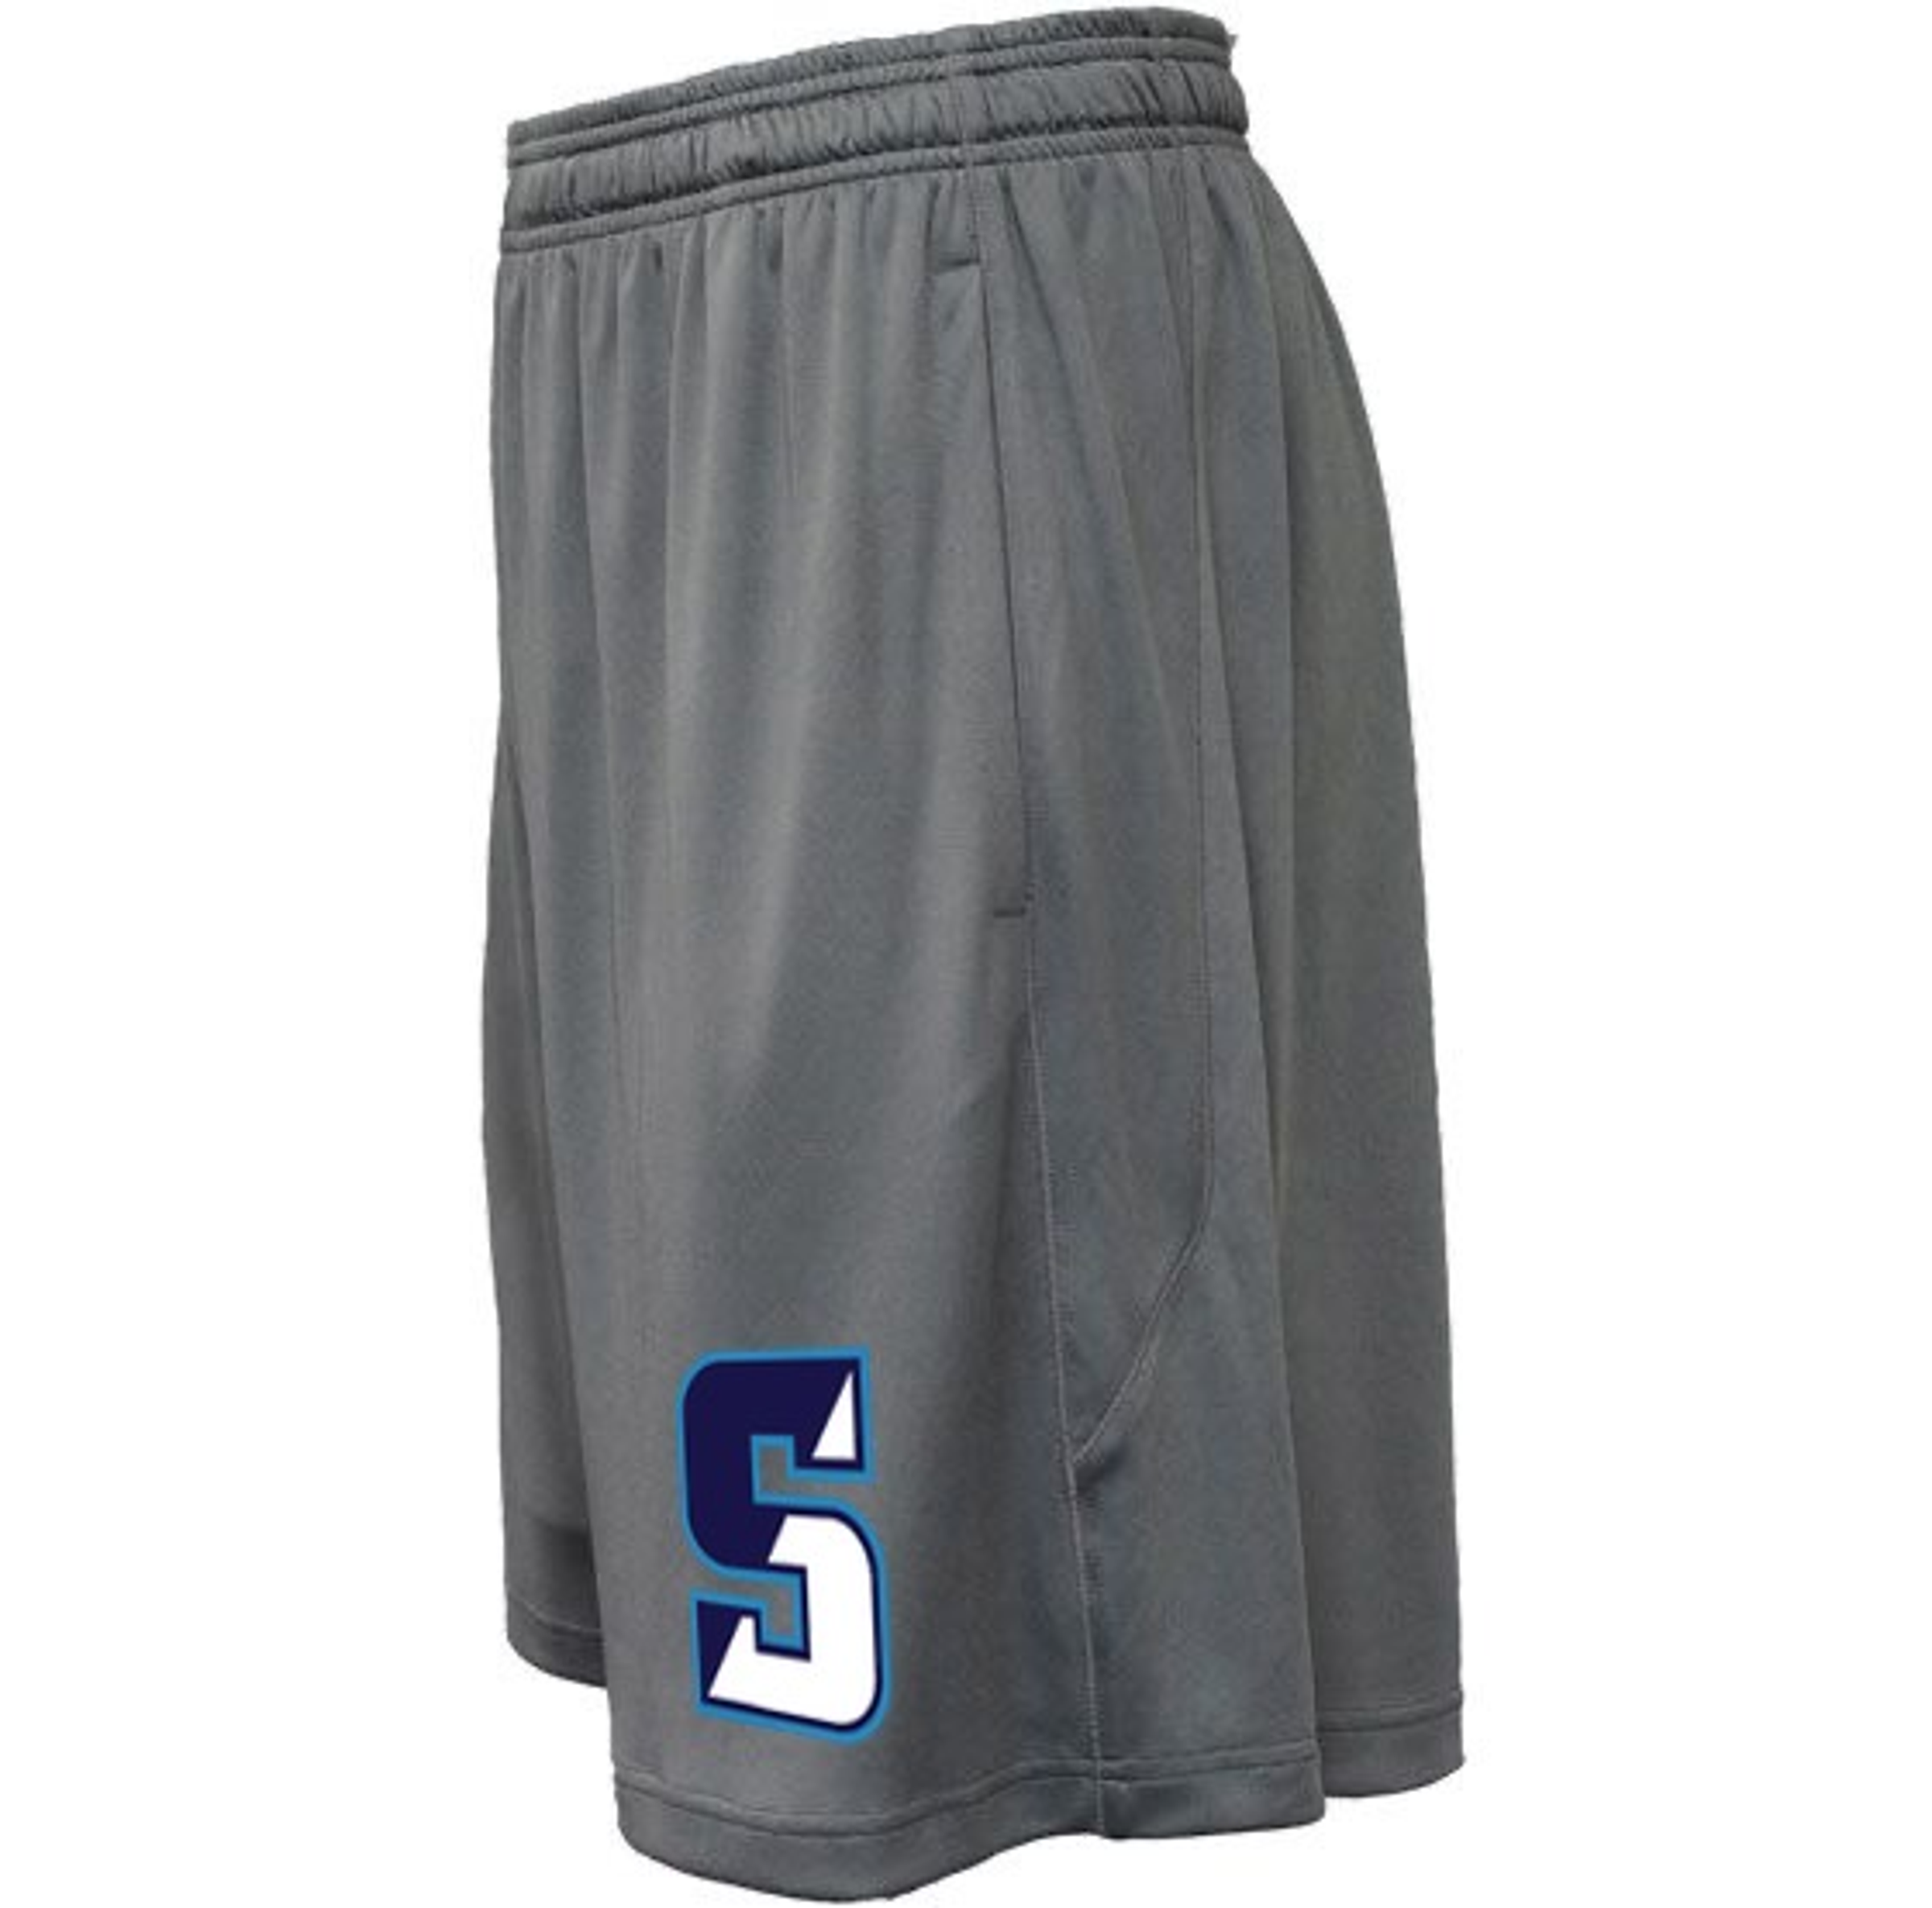 Swampscott Arc Athletic Shorts